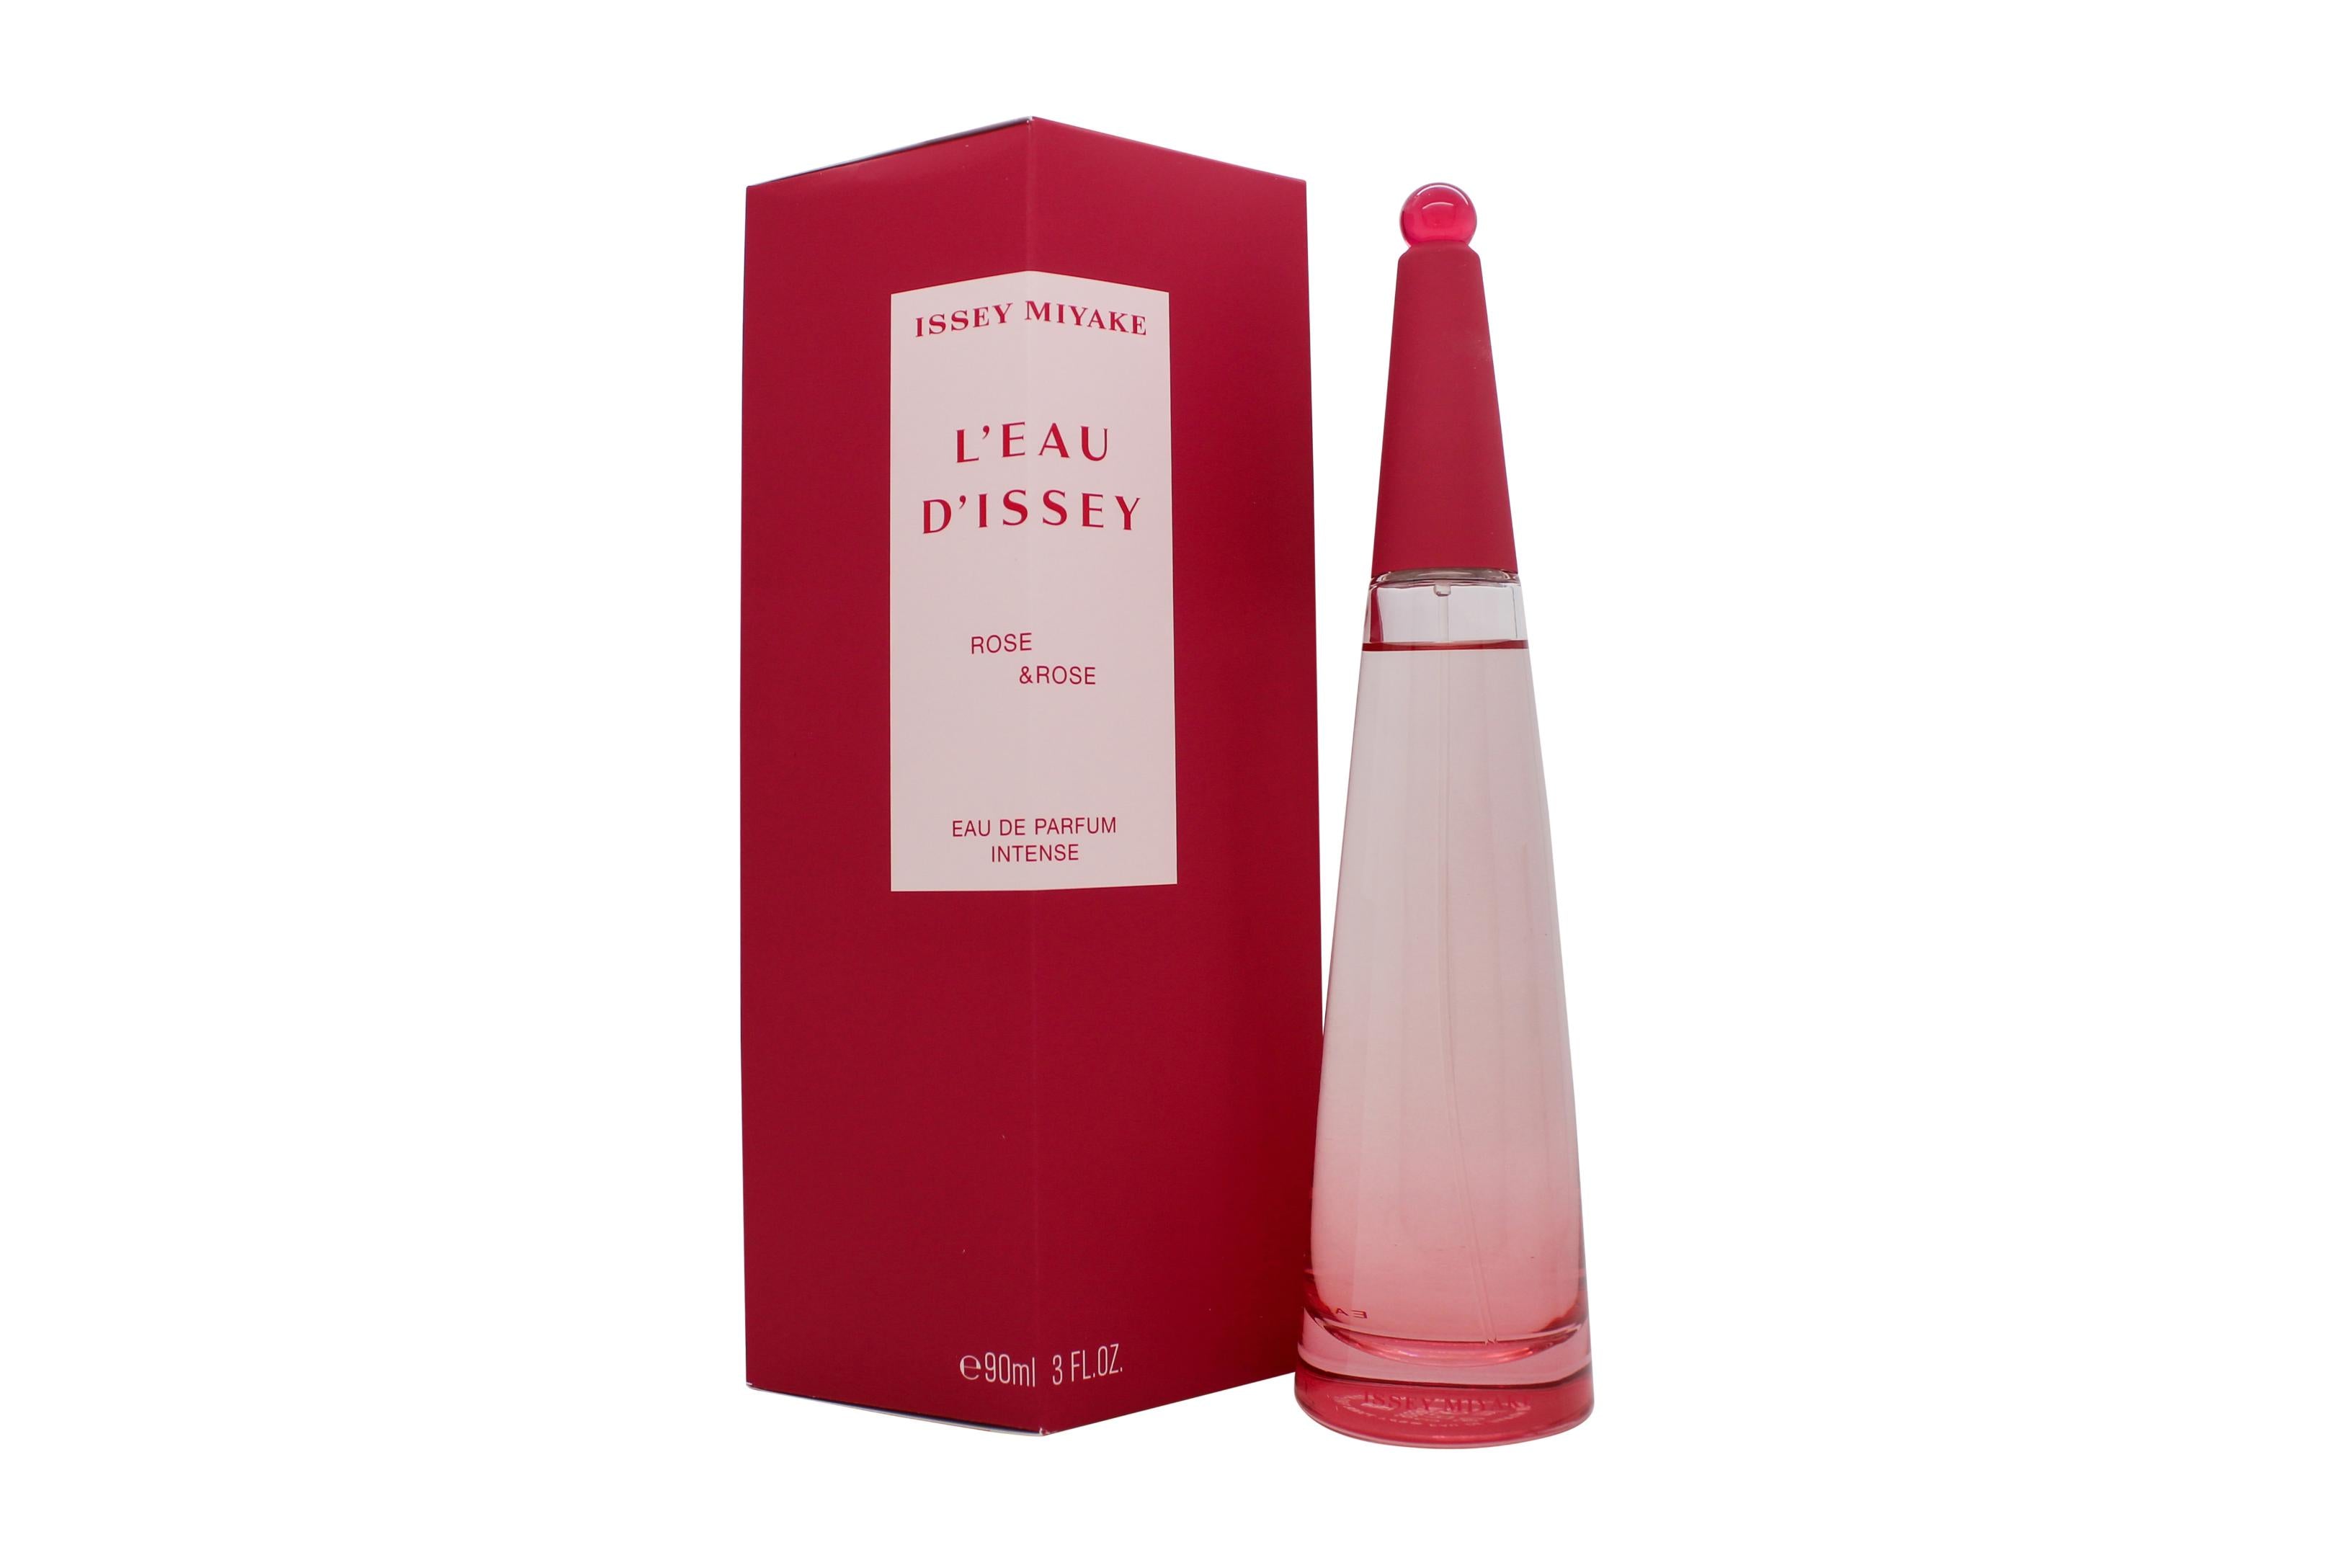 View Issey Miyake LEau DIssey Rose Rose Eau de Parfum Intense 90ml Spray information